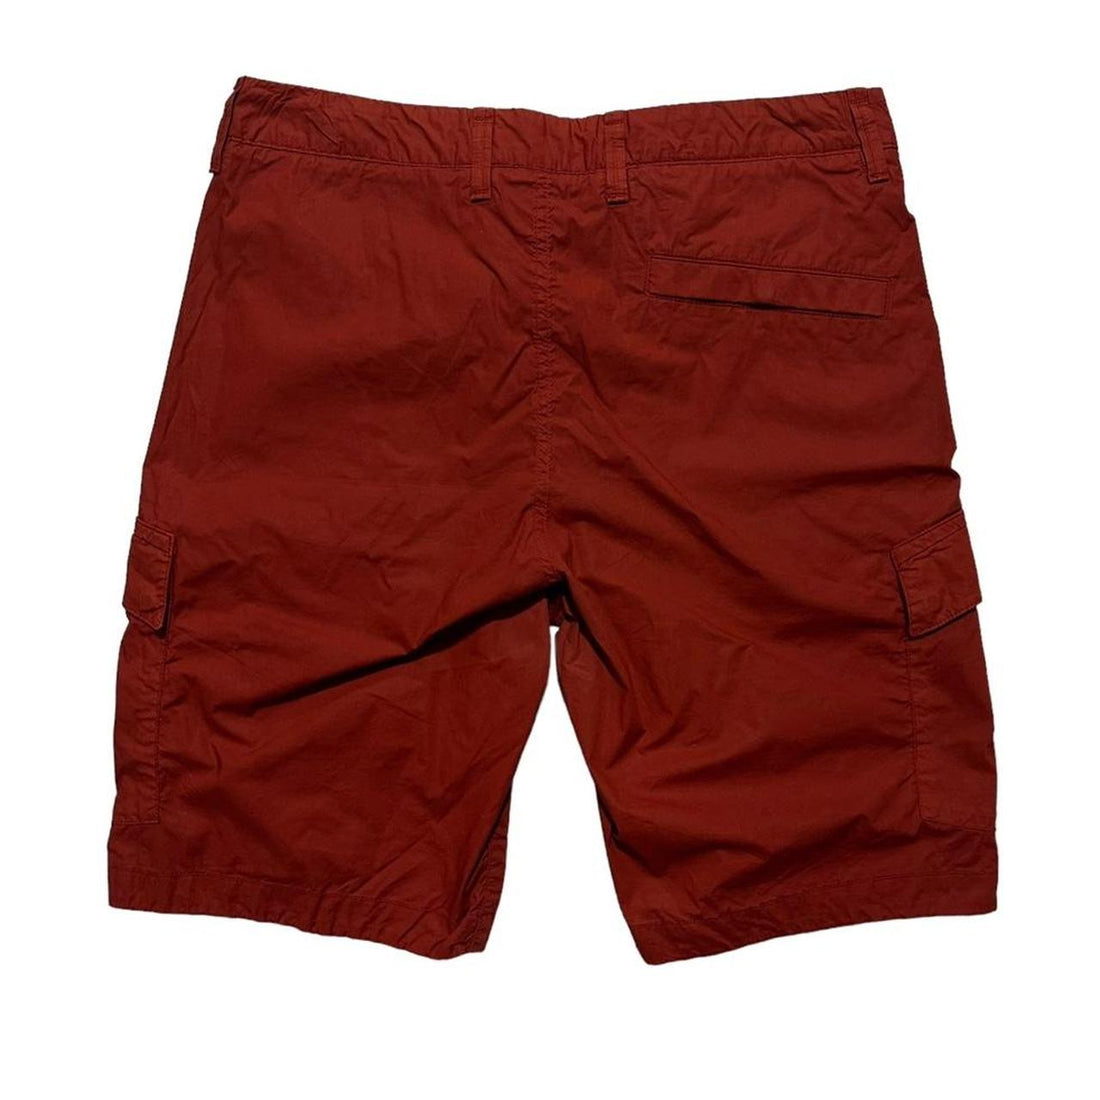 Stone Island Blood Red Shorts